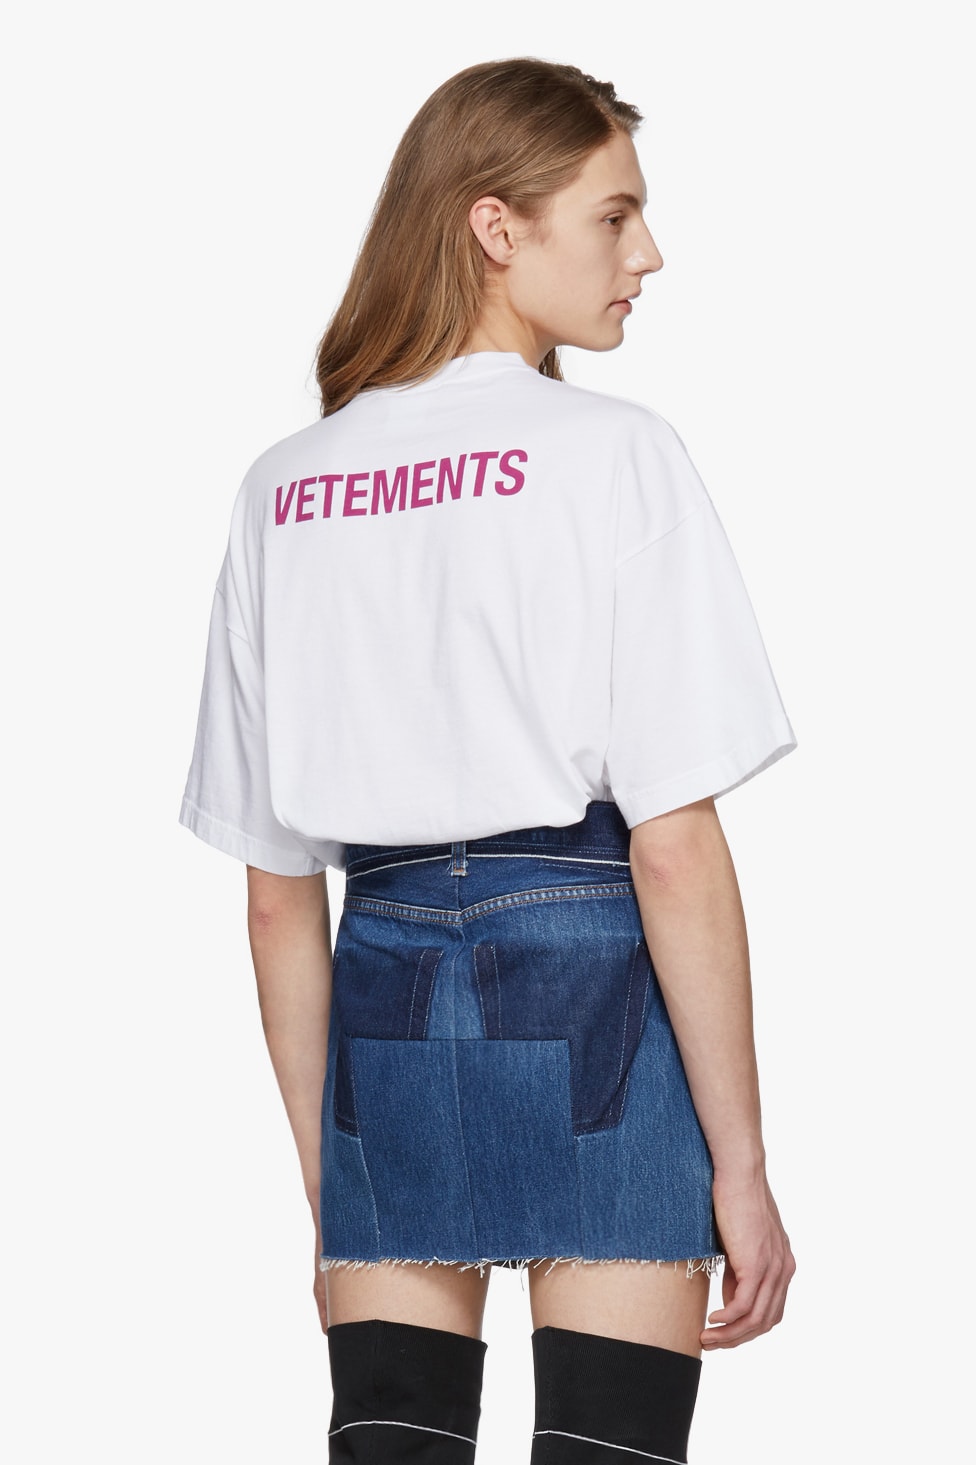 Vetements Entry Level T-Shirt Affordable White Pink Print Staff Merchandise Merch Demna Gvasalia